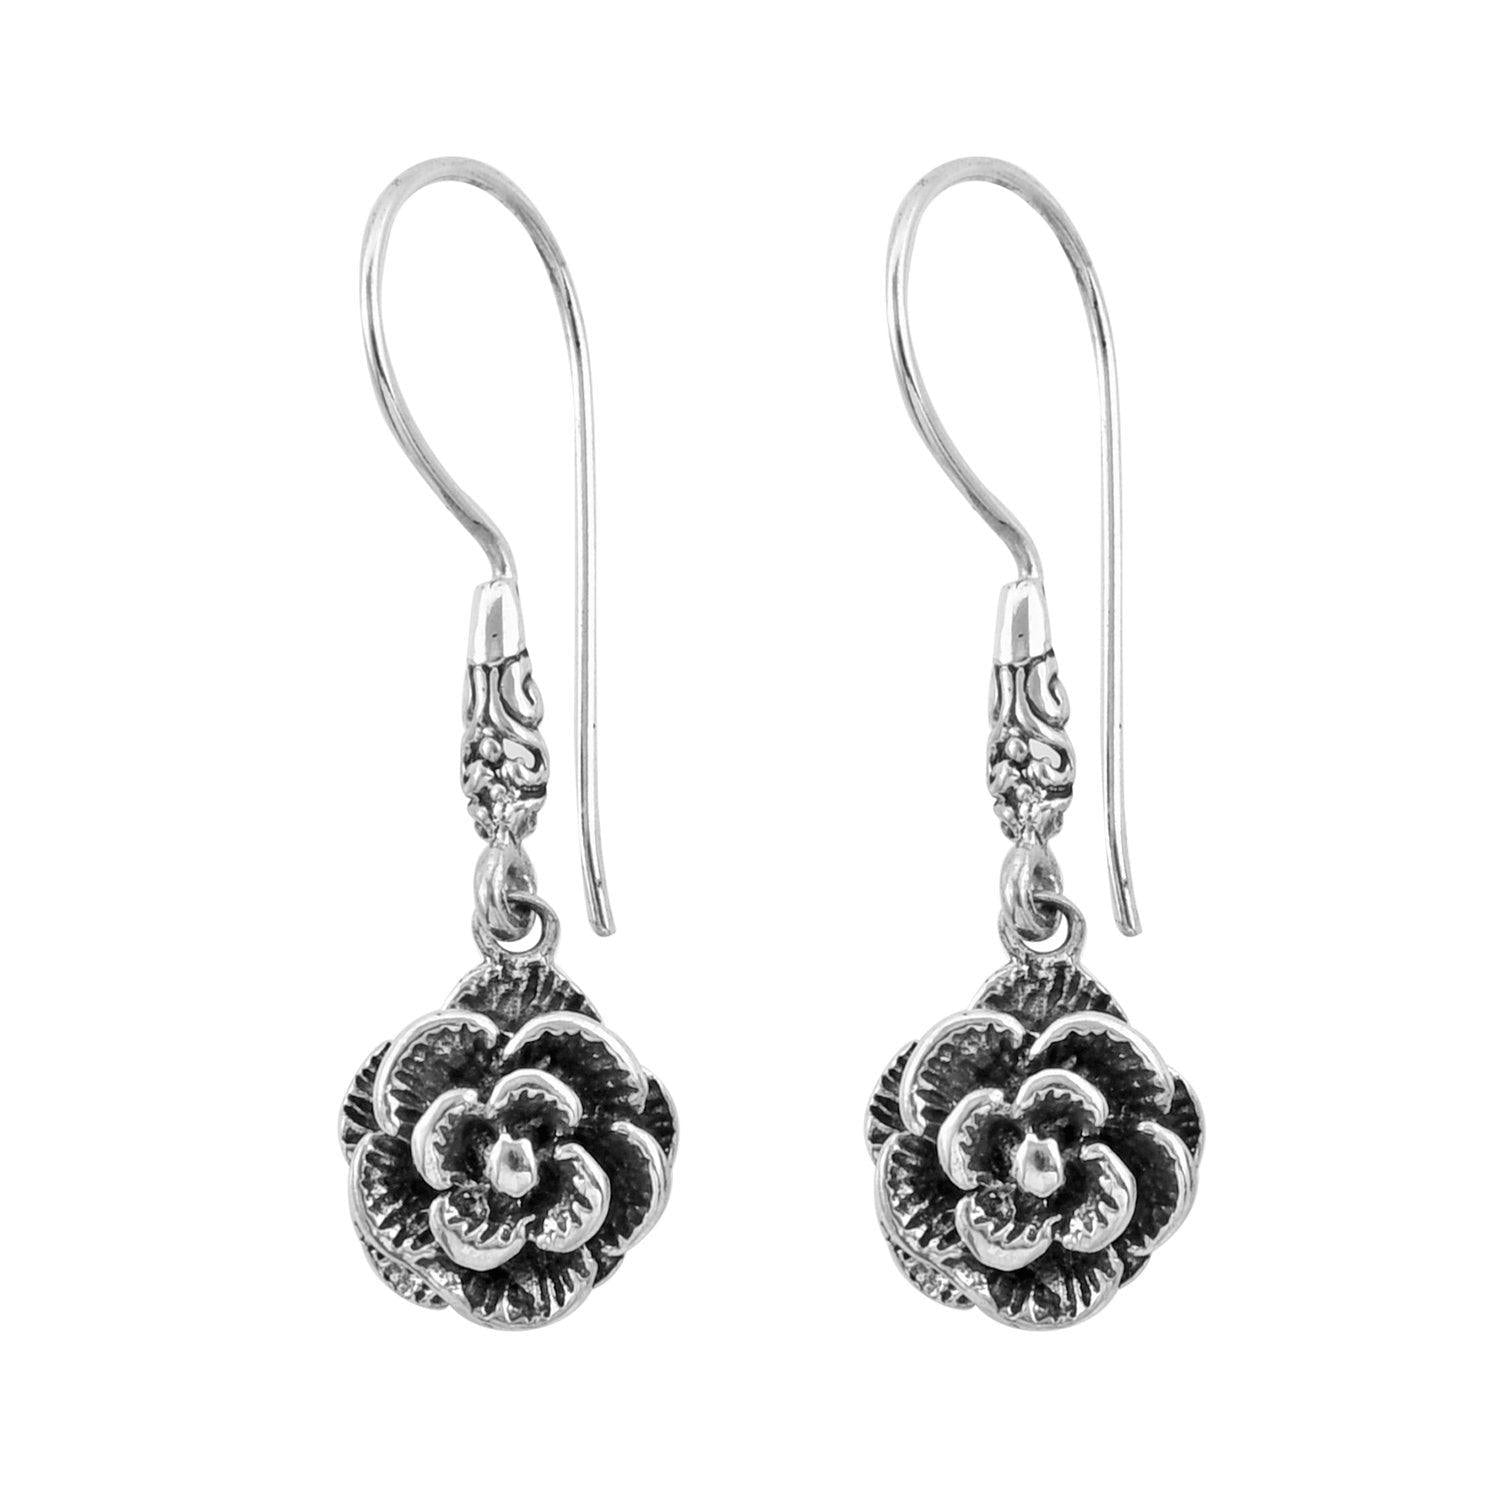 Handmade ROSE FLOWER Earrings in SOLID 925 Sterling Silver - Inspiring Jewellery